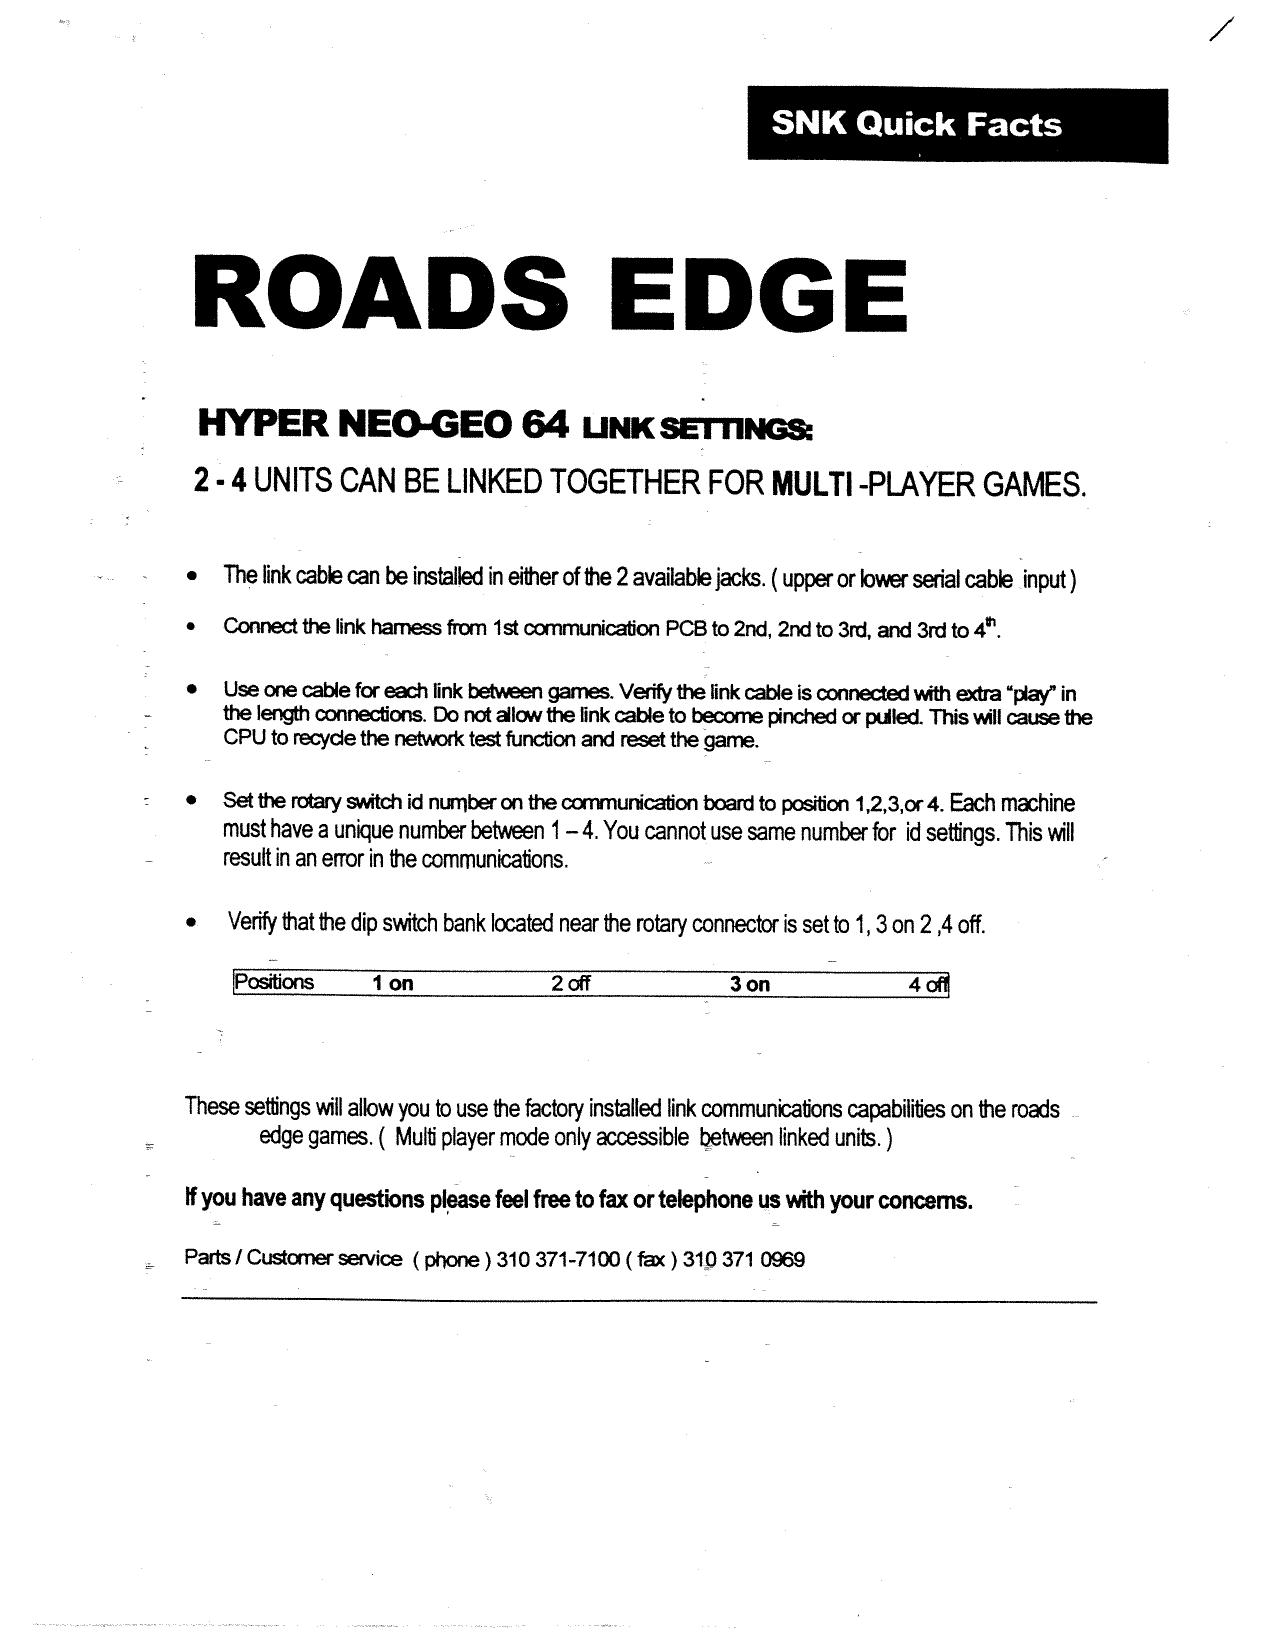 Roads Edge (Hyper Neo-Geo 64)